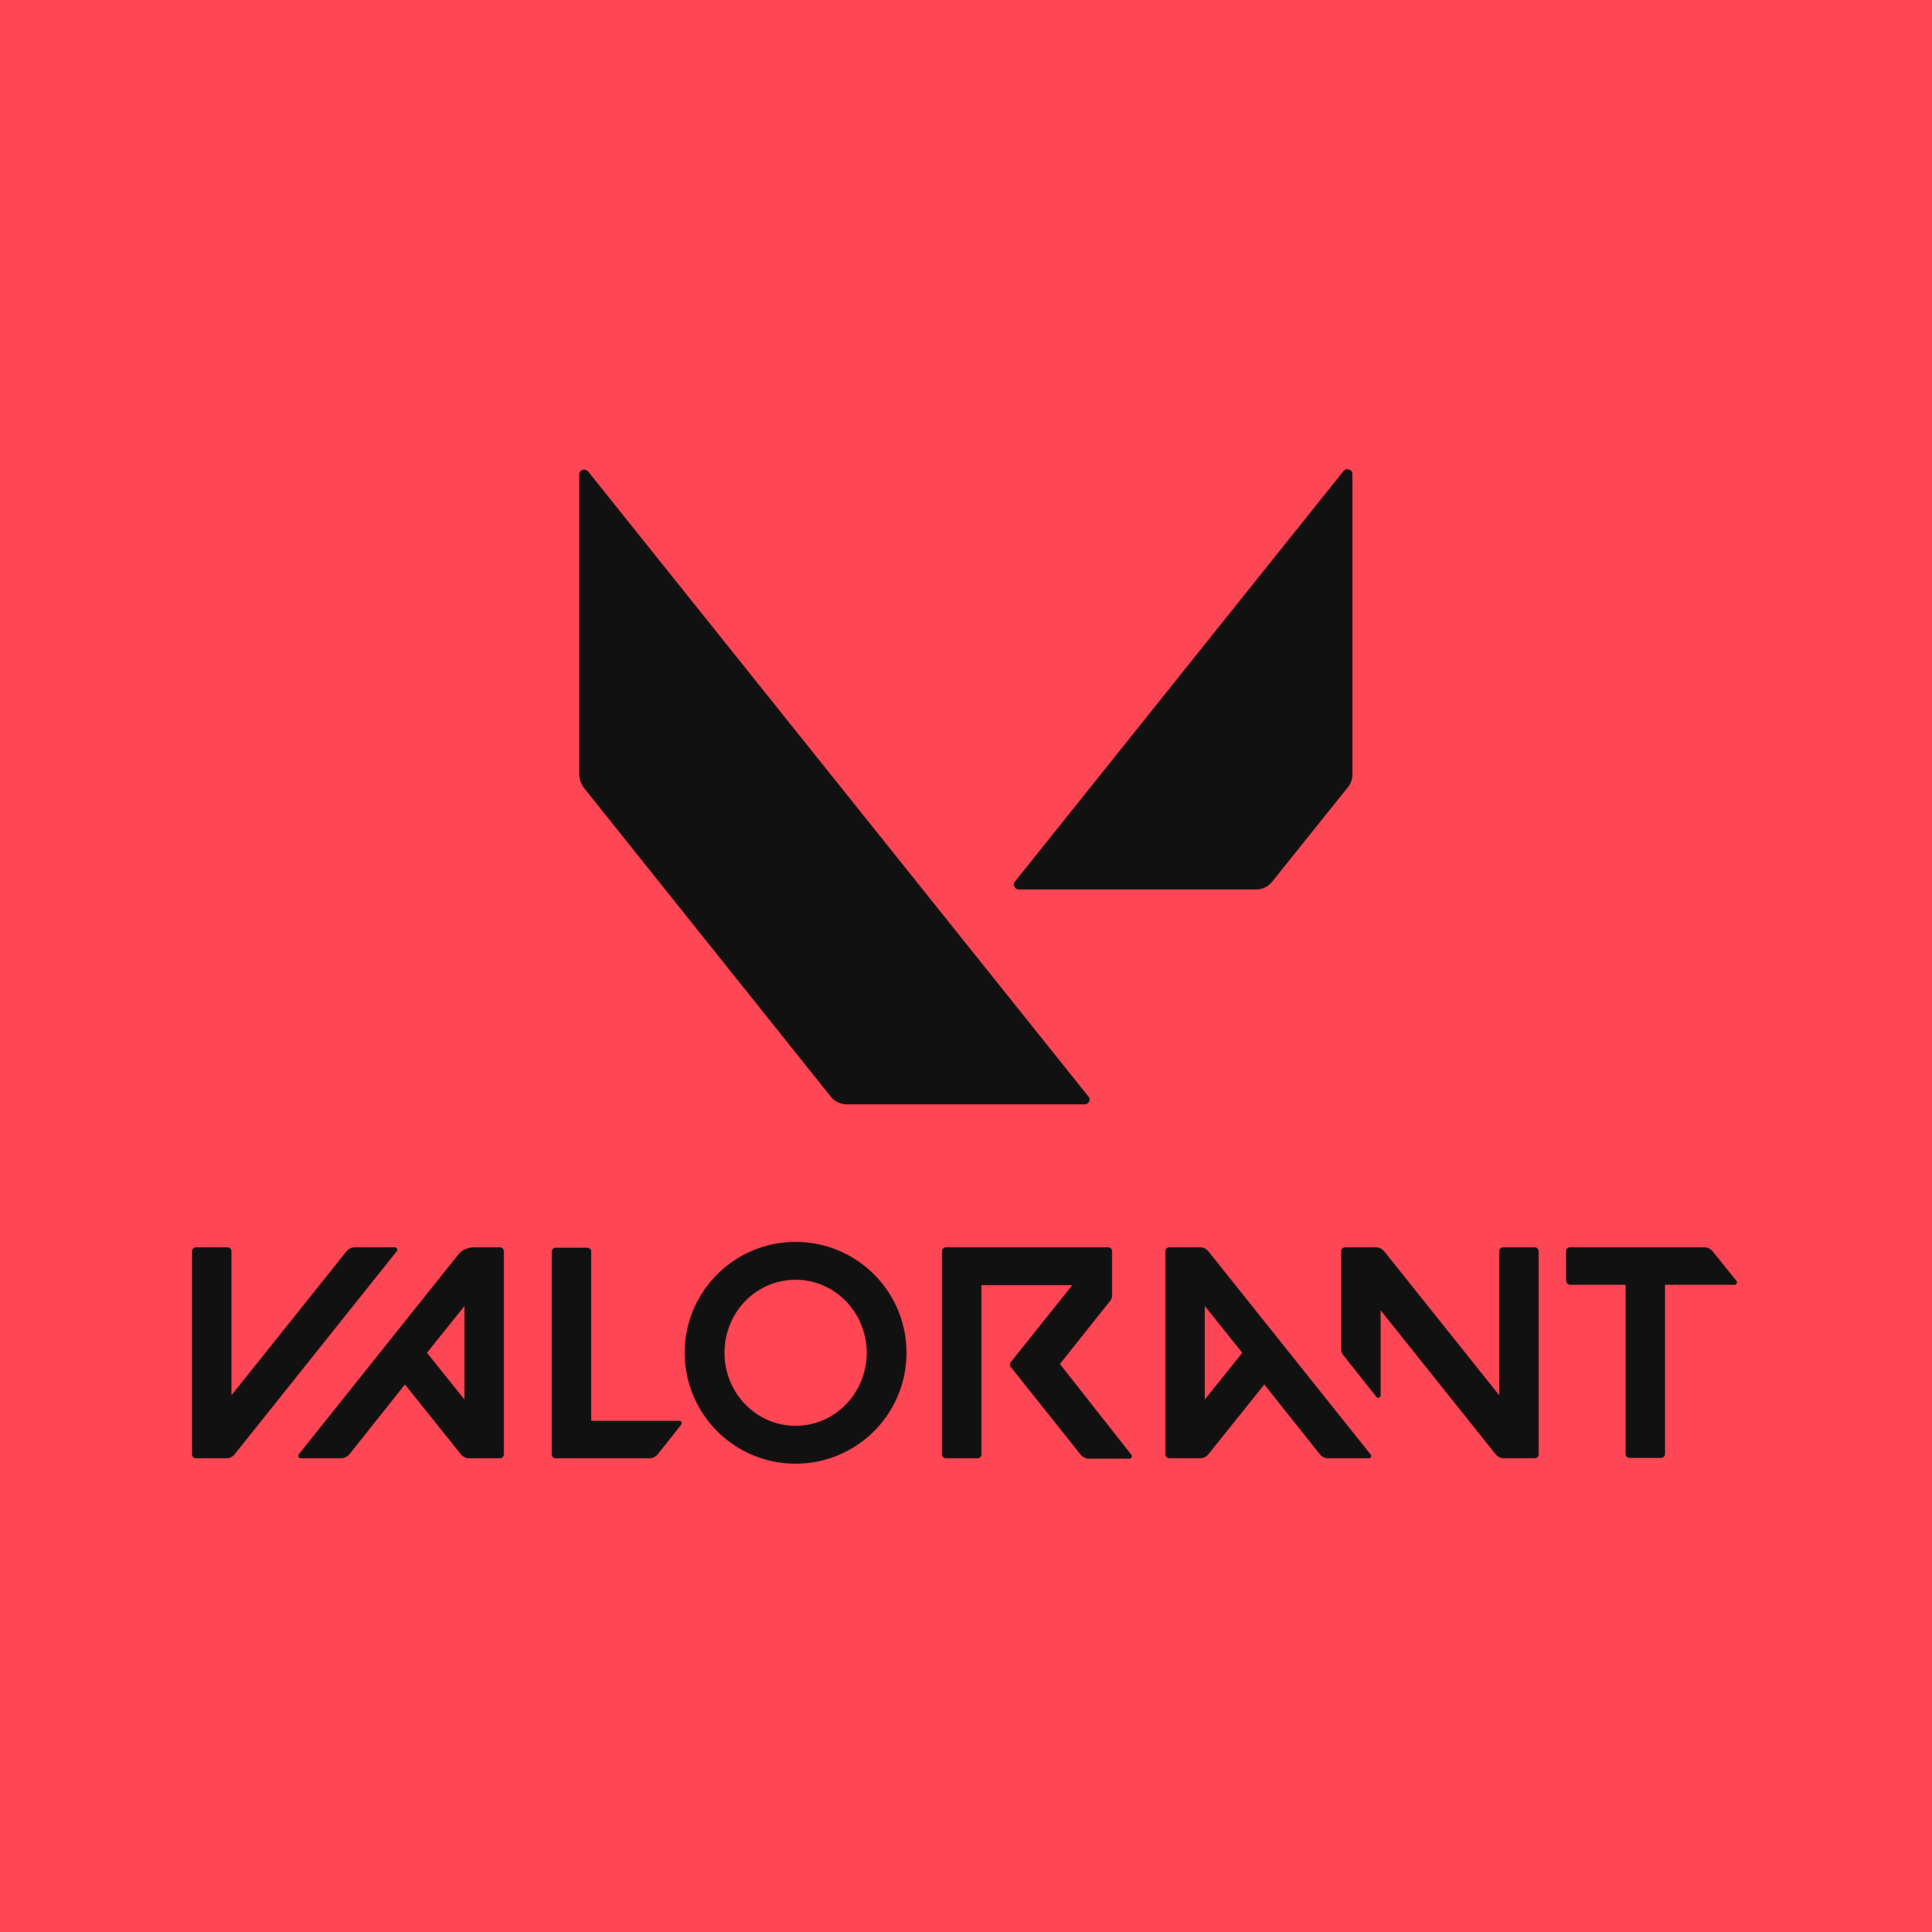 Valorant – Logos Download